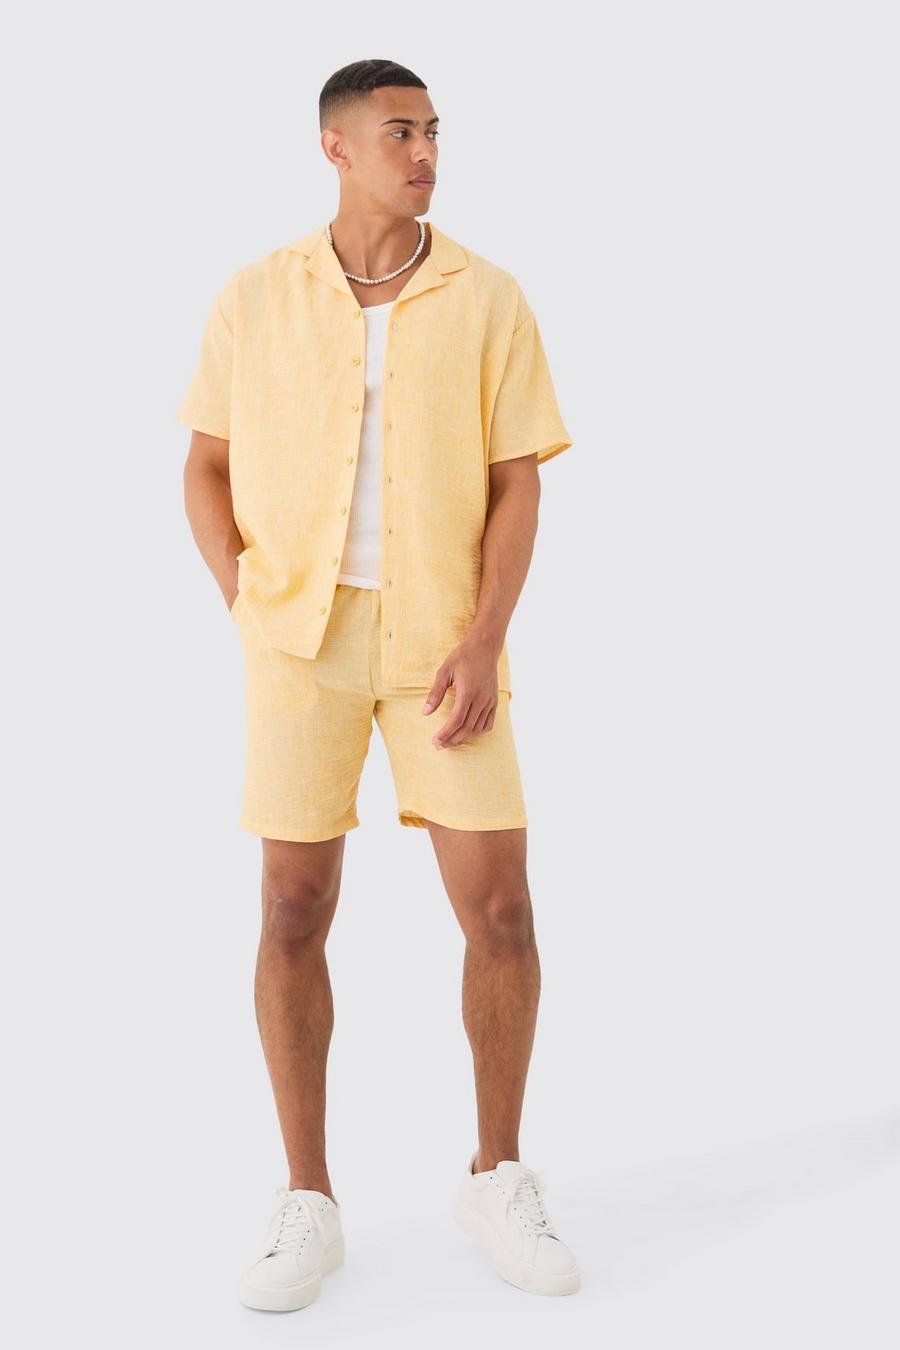 Ensemble oversize en lin avec chemise et short, Yellow